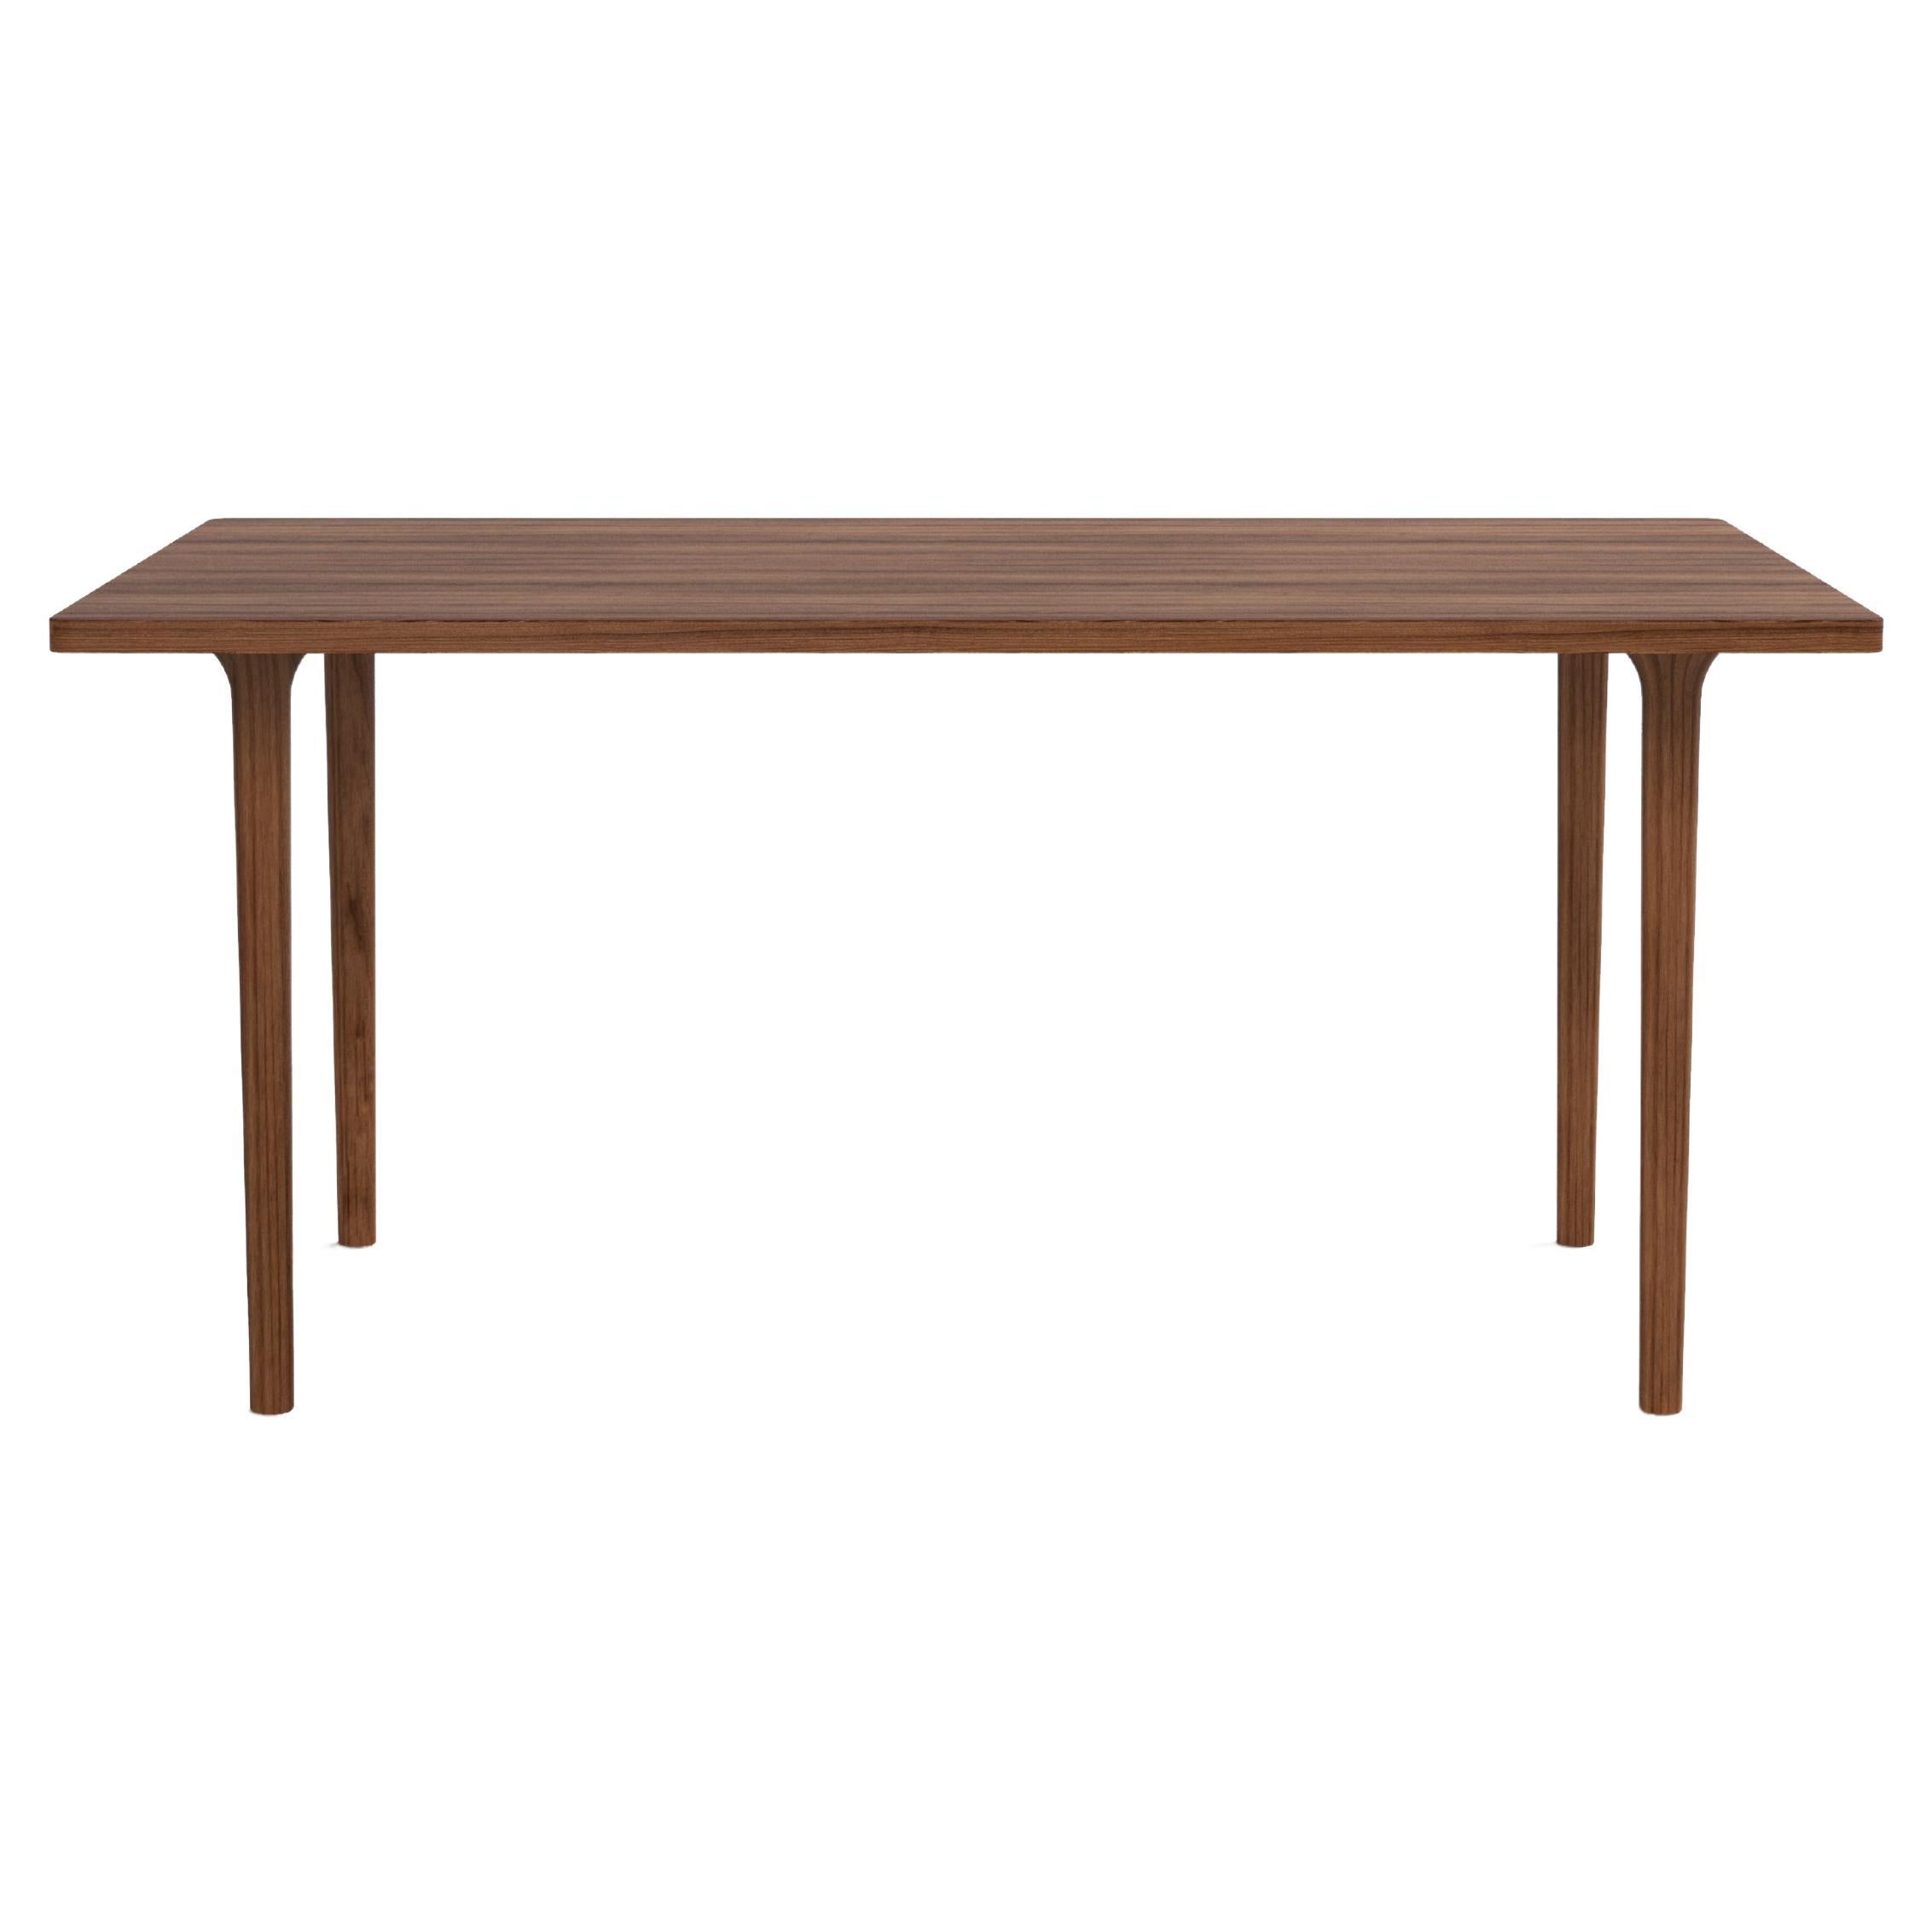 Minimalist Modern Table in Walnut Wood Rectangular